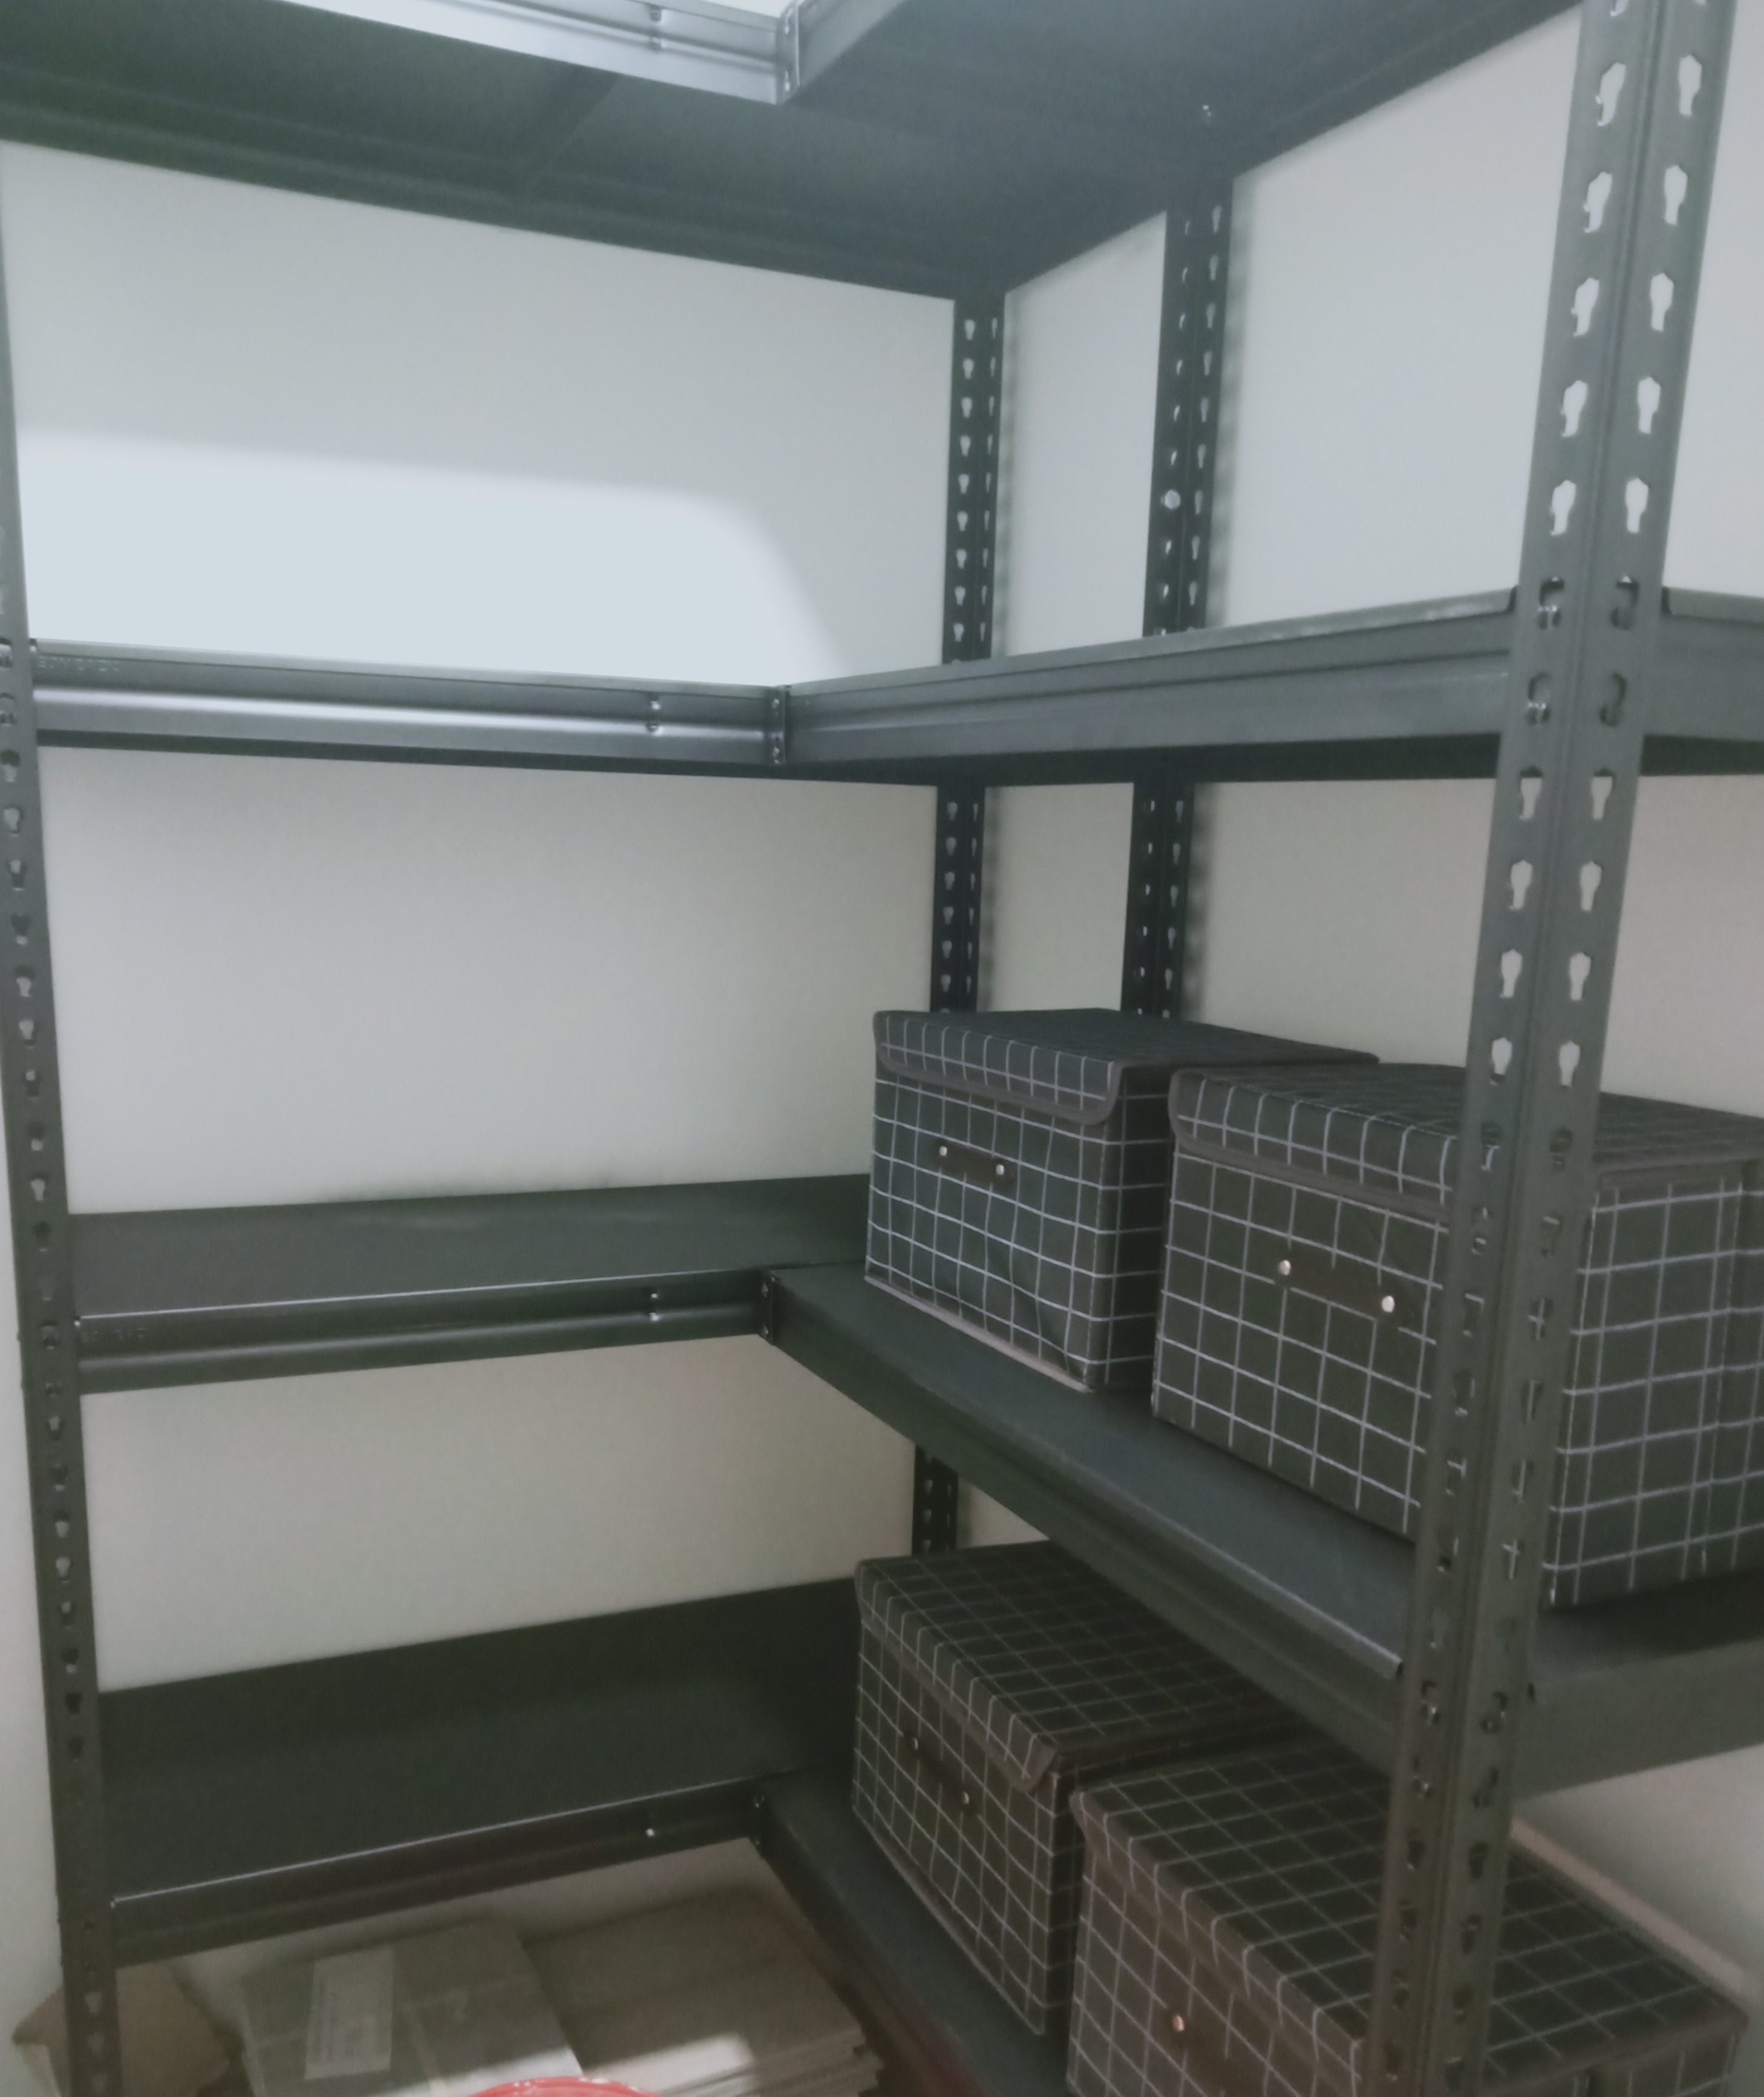  black-shelf-with-storage-boxes Black Shelving Series  